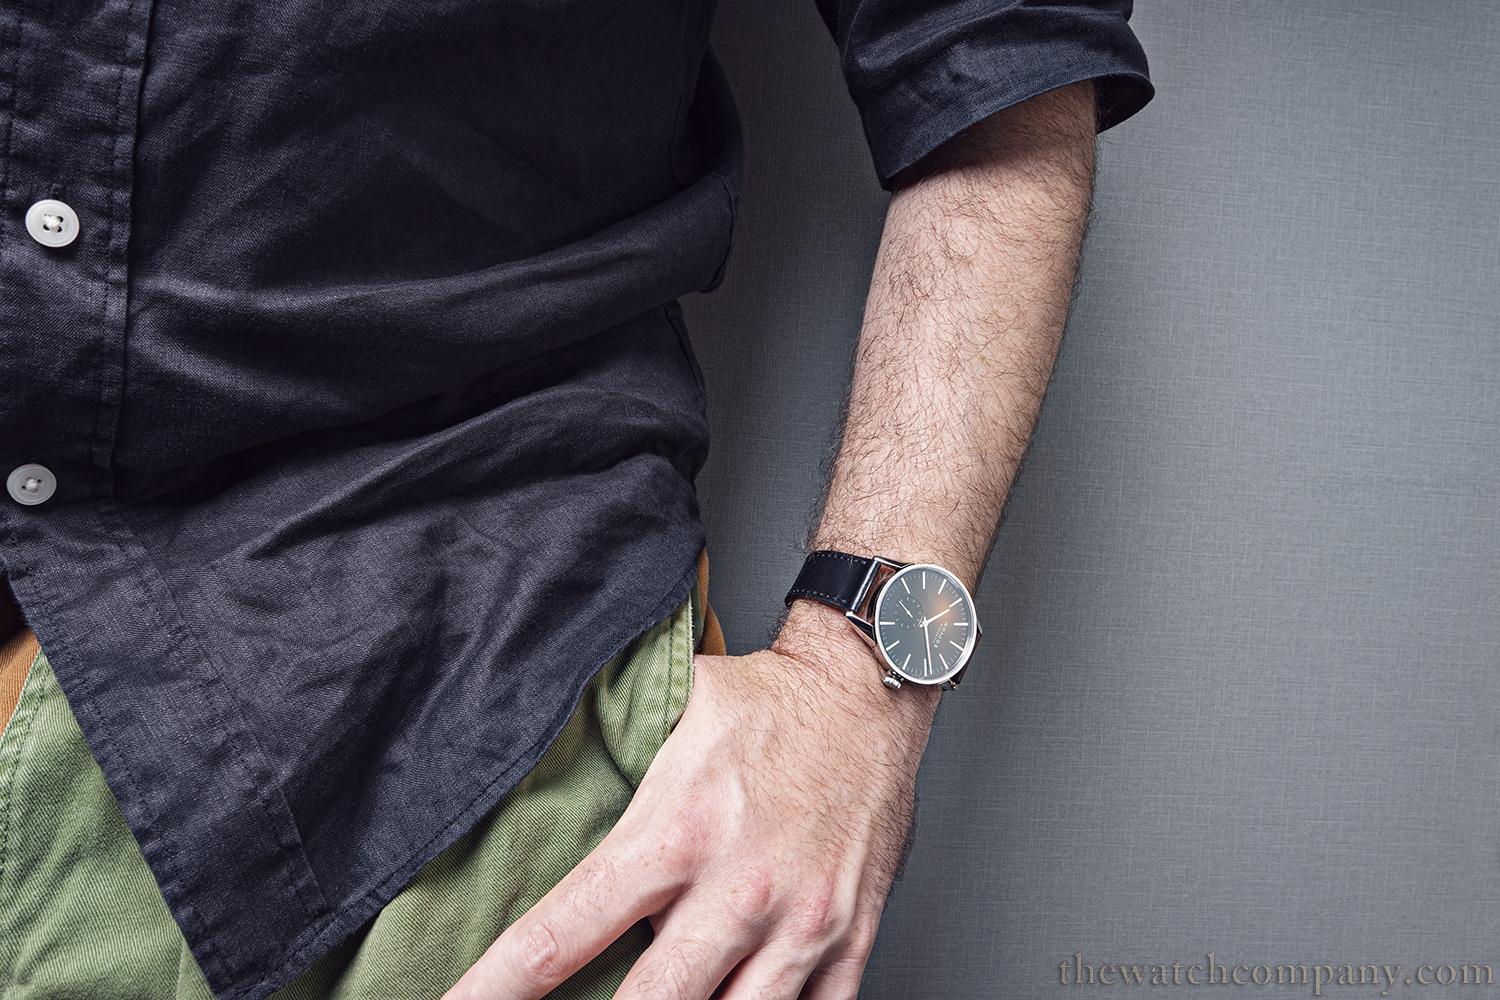 Twcが厳選 40代メンズの秋冬コーデの腕時計のオススメ10本 The Watch Company